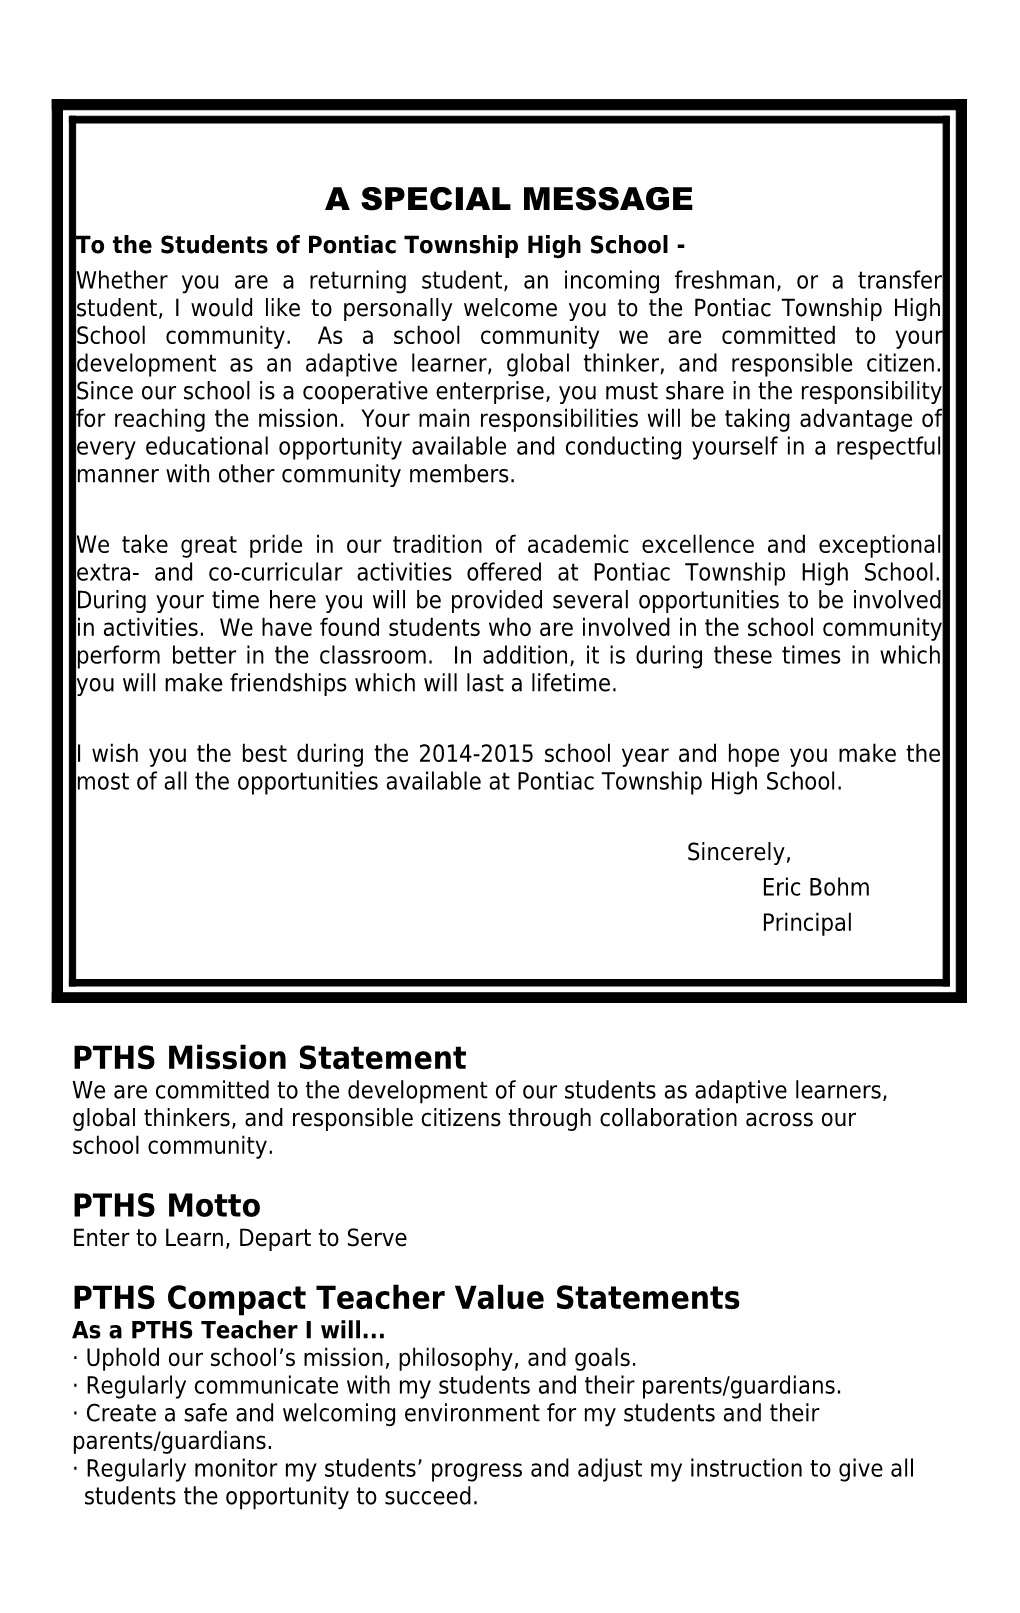 PTHS Mission Statement